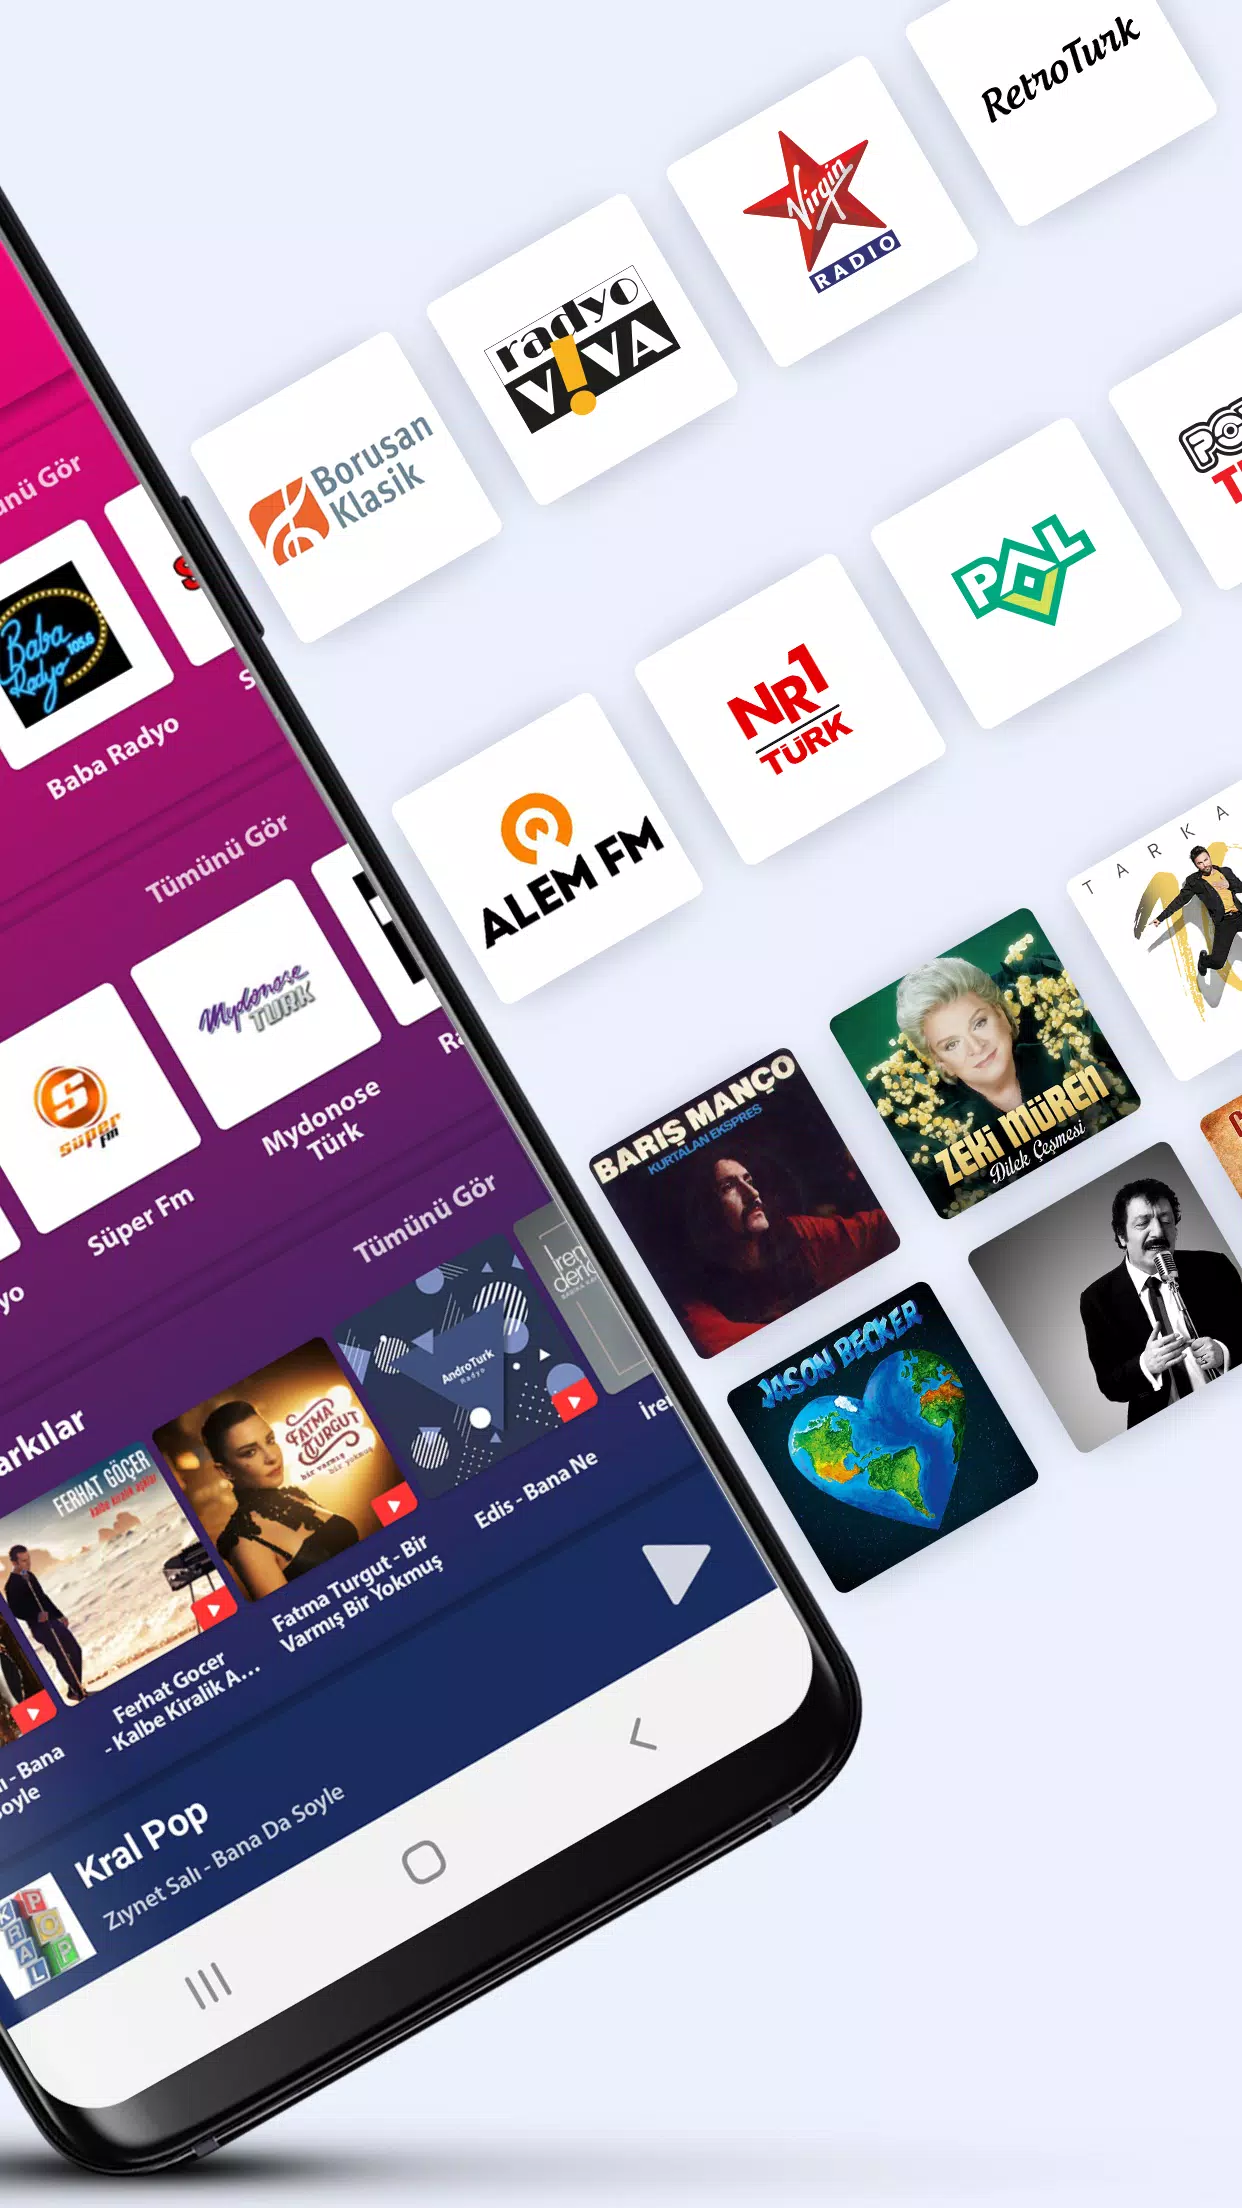 AndroTurk Radyo, Turkish Radio APK for Android Download